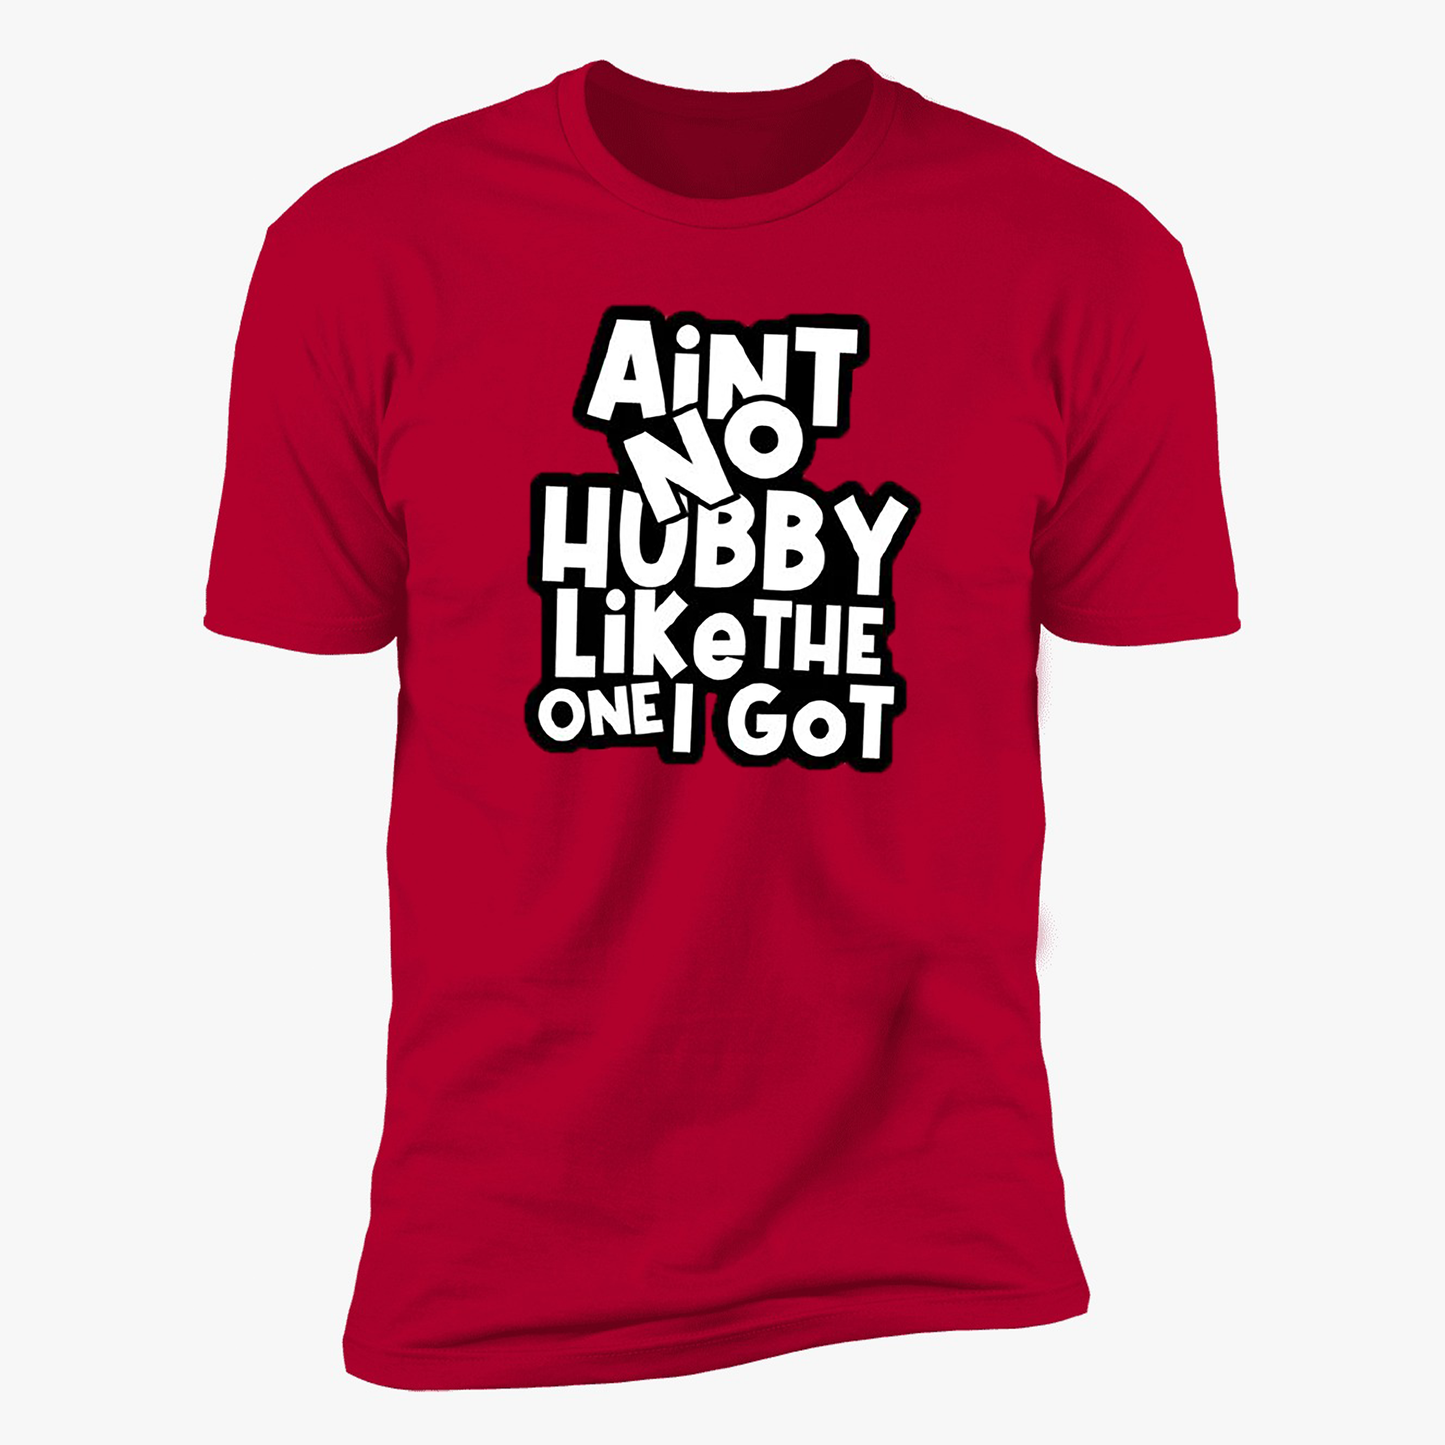 Aint No Wifey/Hubby Like The One I Got | Anniversary Shirts